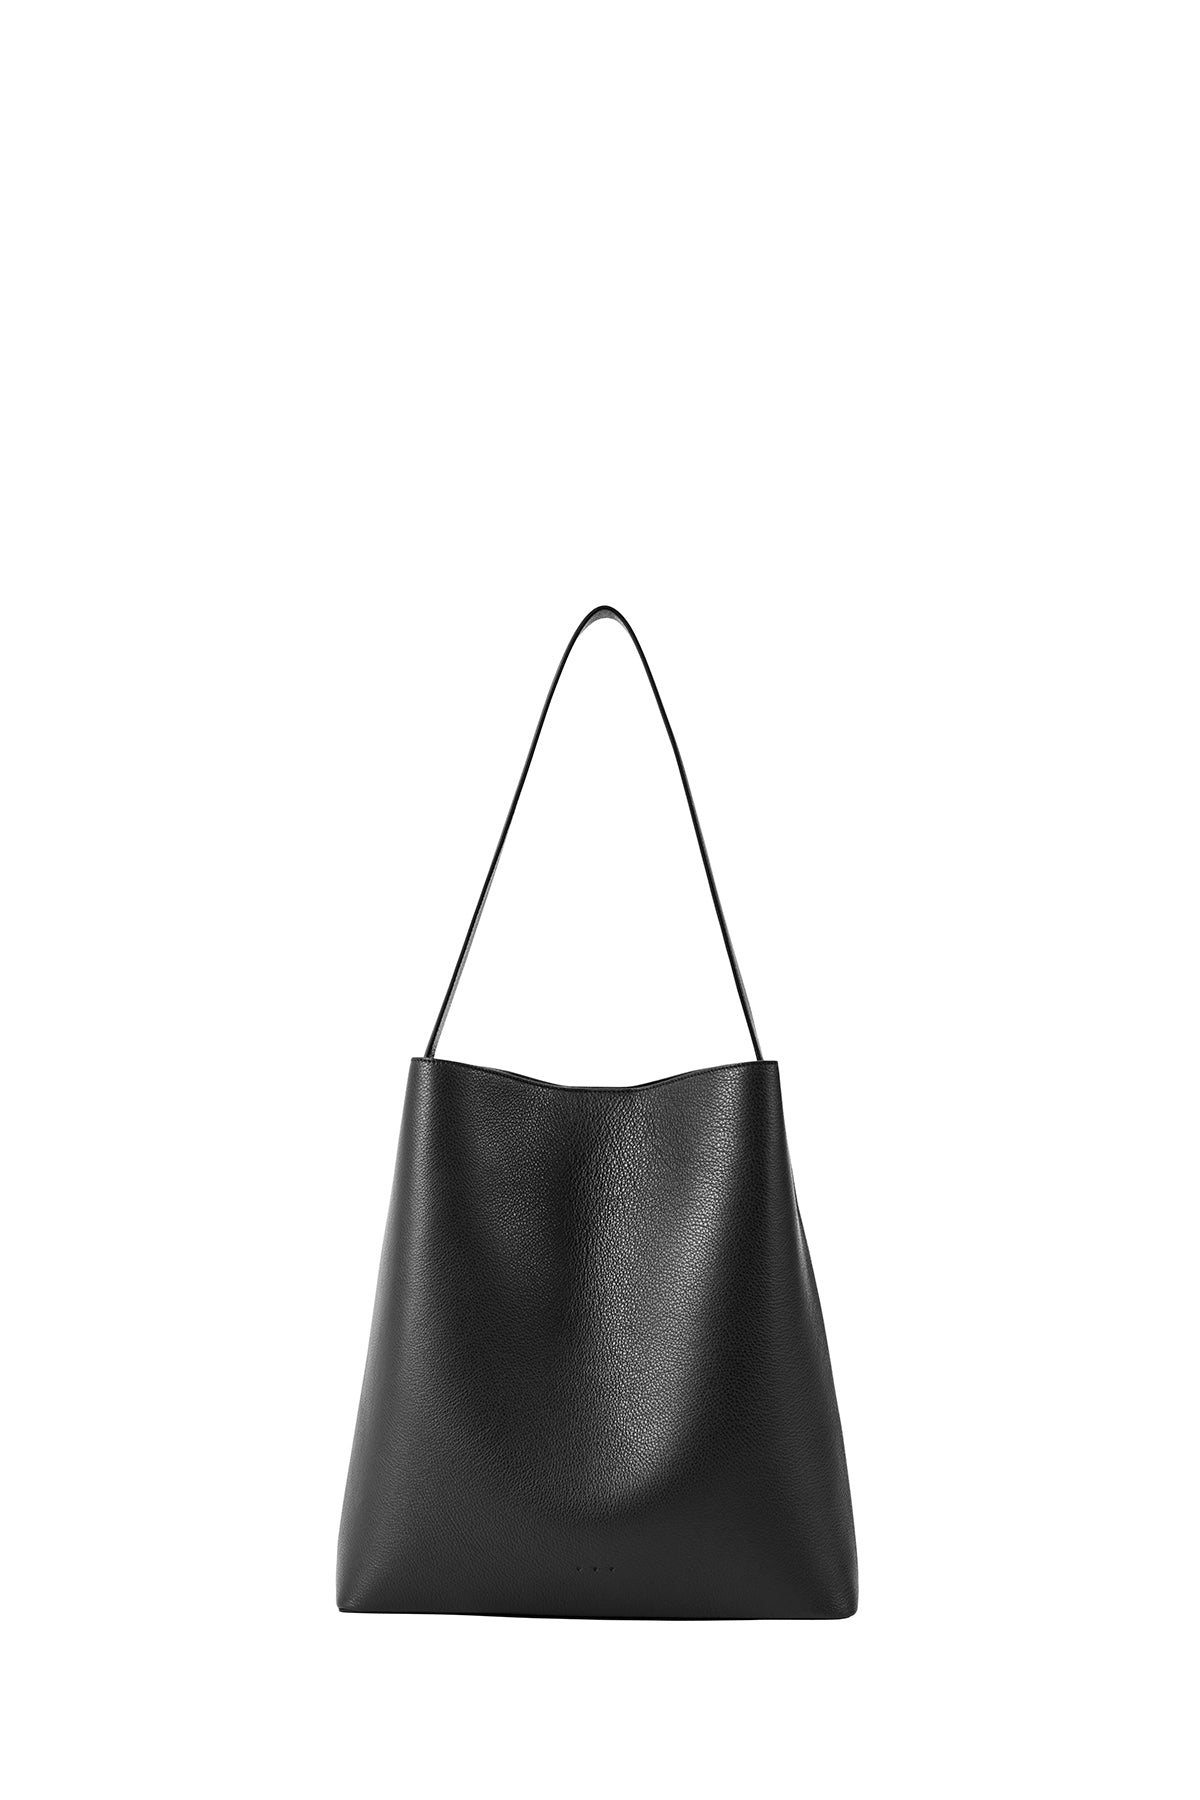 Aesther Ekme Sac Mini Leather Crossbody Bag, 192 Cappuccino, Women's, Handbags & Purses Crossbody Bags & Camera Bags